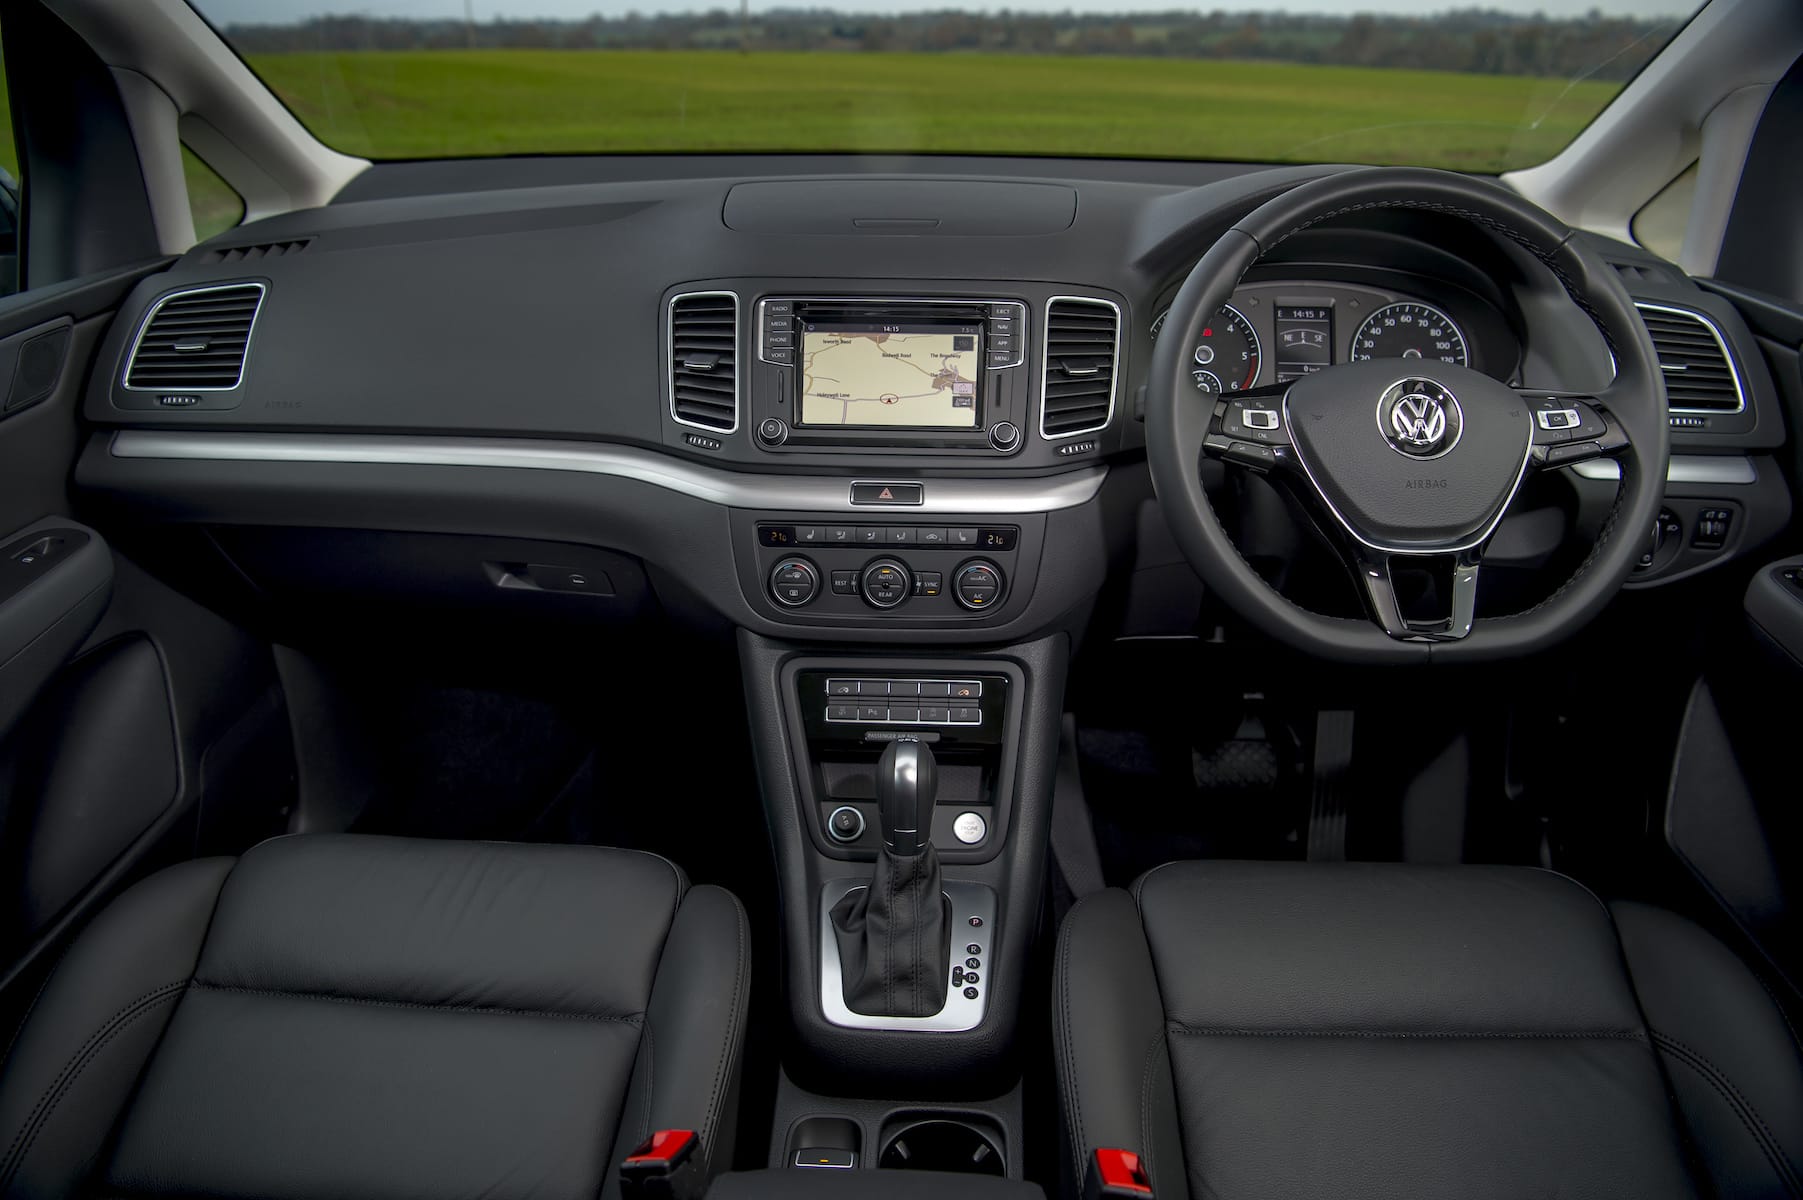 Volkswagen Sharan (2015 onwards) – interior and dashboard